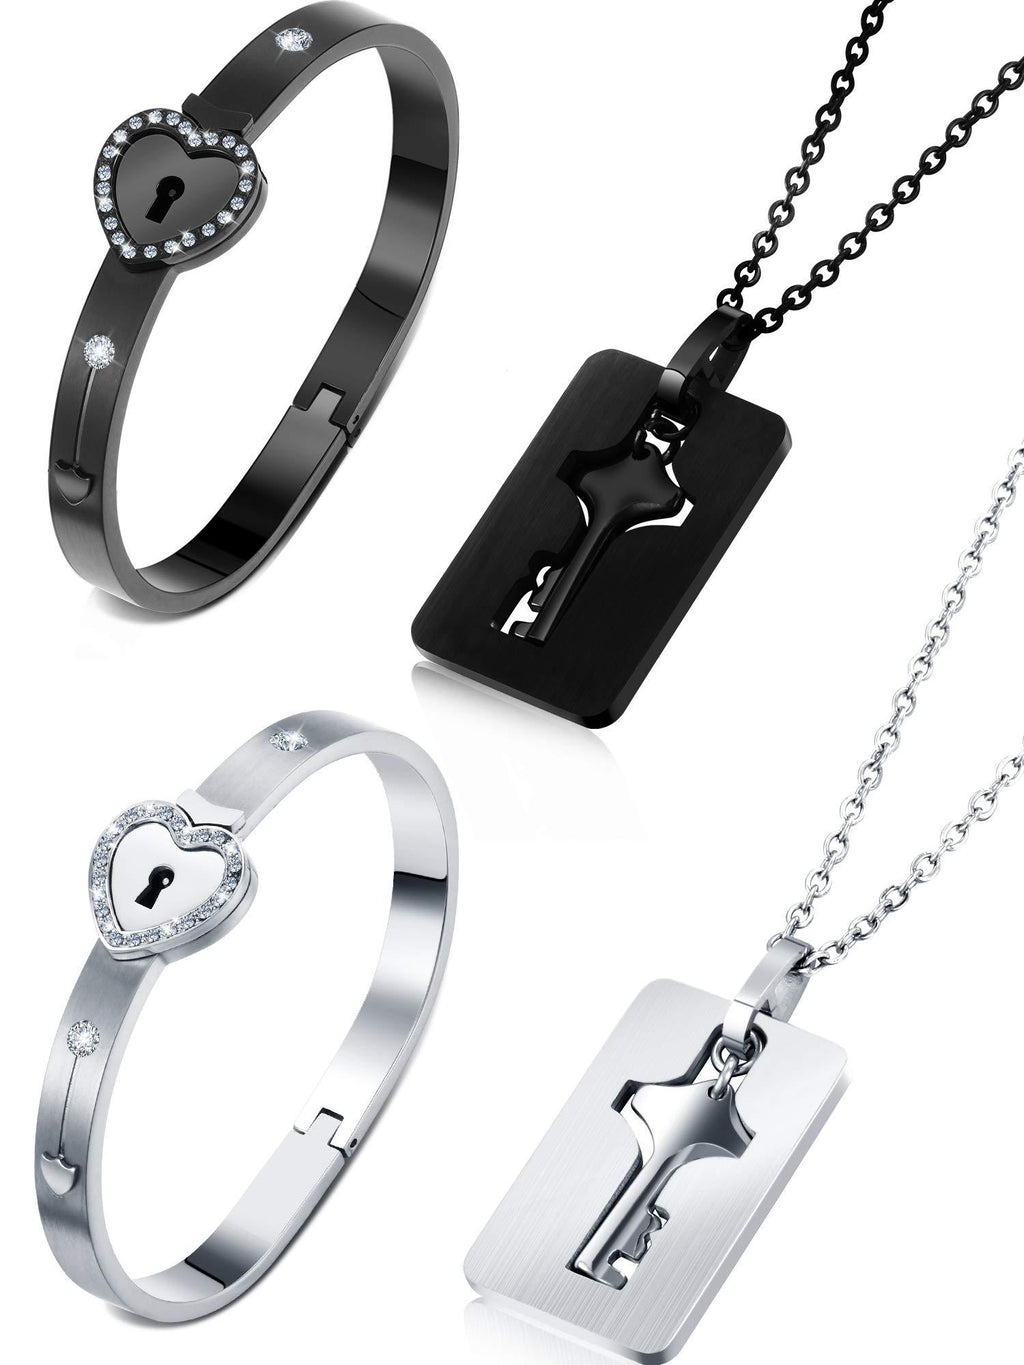 [Australia] - Hicarer 2 Sets Couple Heart Charm Lock Bracelet and Key Necklace Lock Matching Bangle Titanium Steel Couples Jewelry Set for Valentine's Day Wedding Anniversary Chic Rhinestones Style 